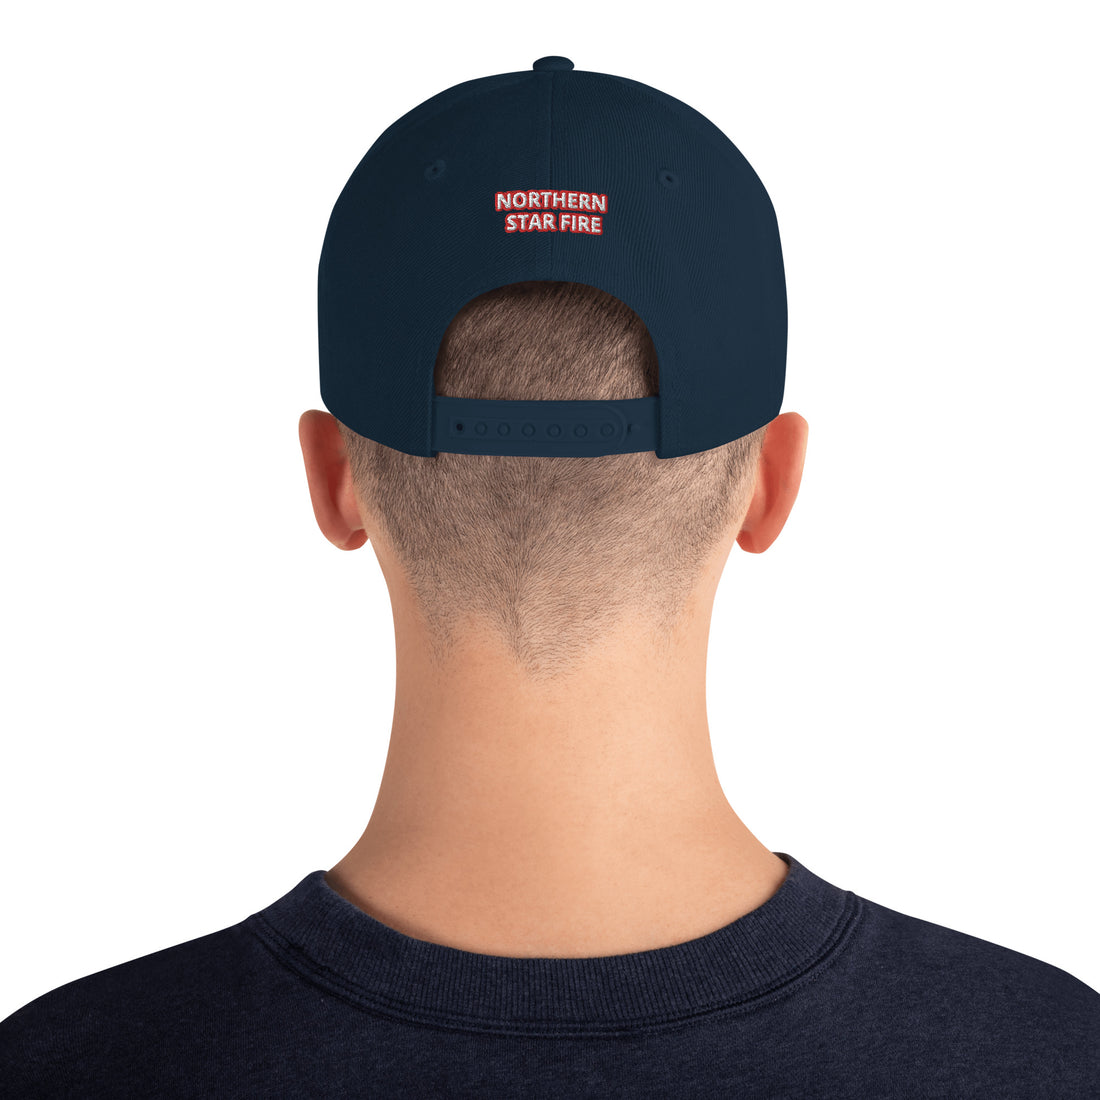 "NORTHERN STAR FIRE" Snapback Hat